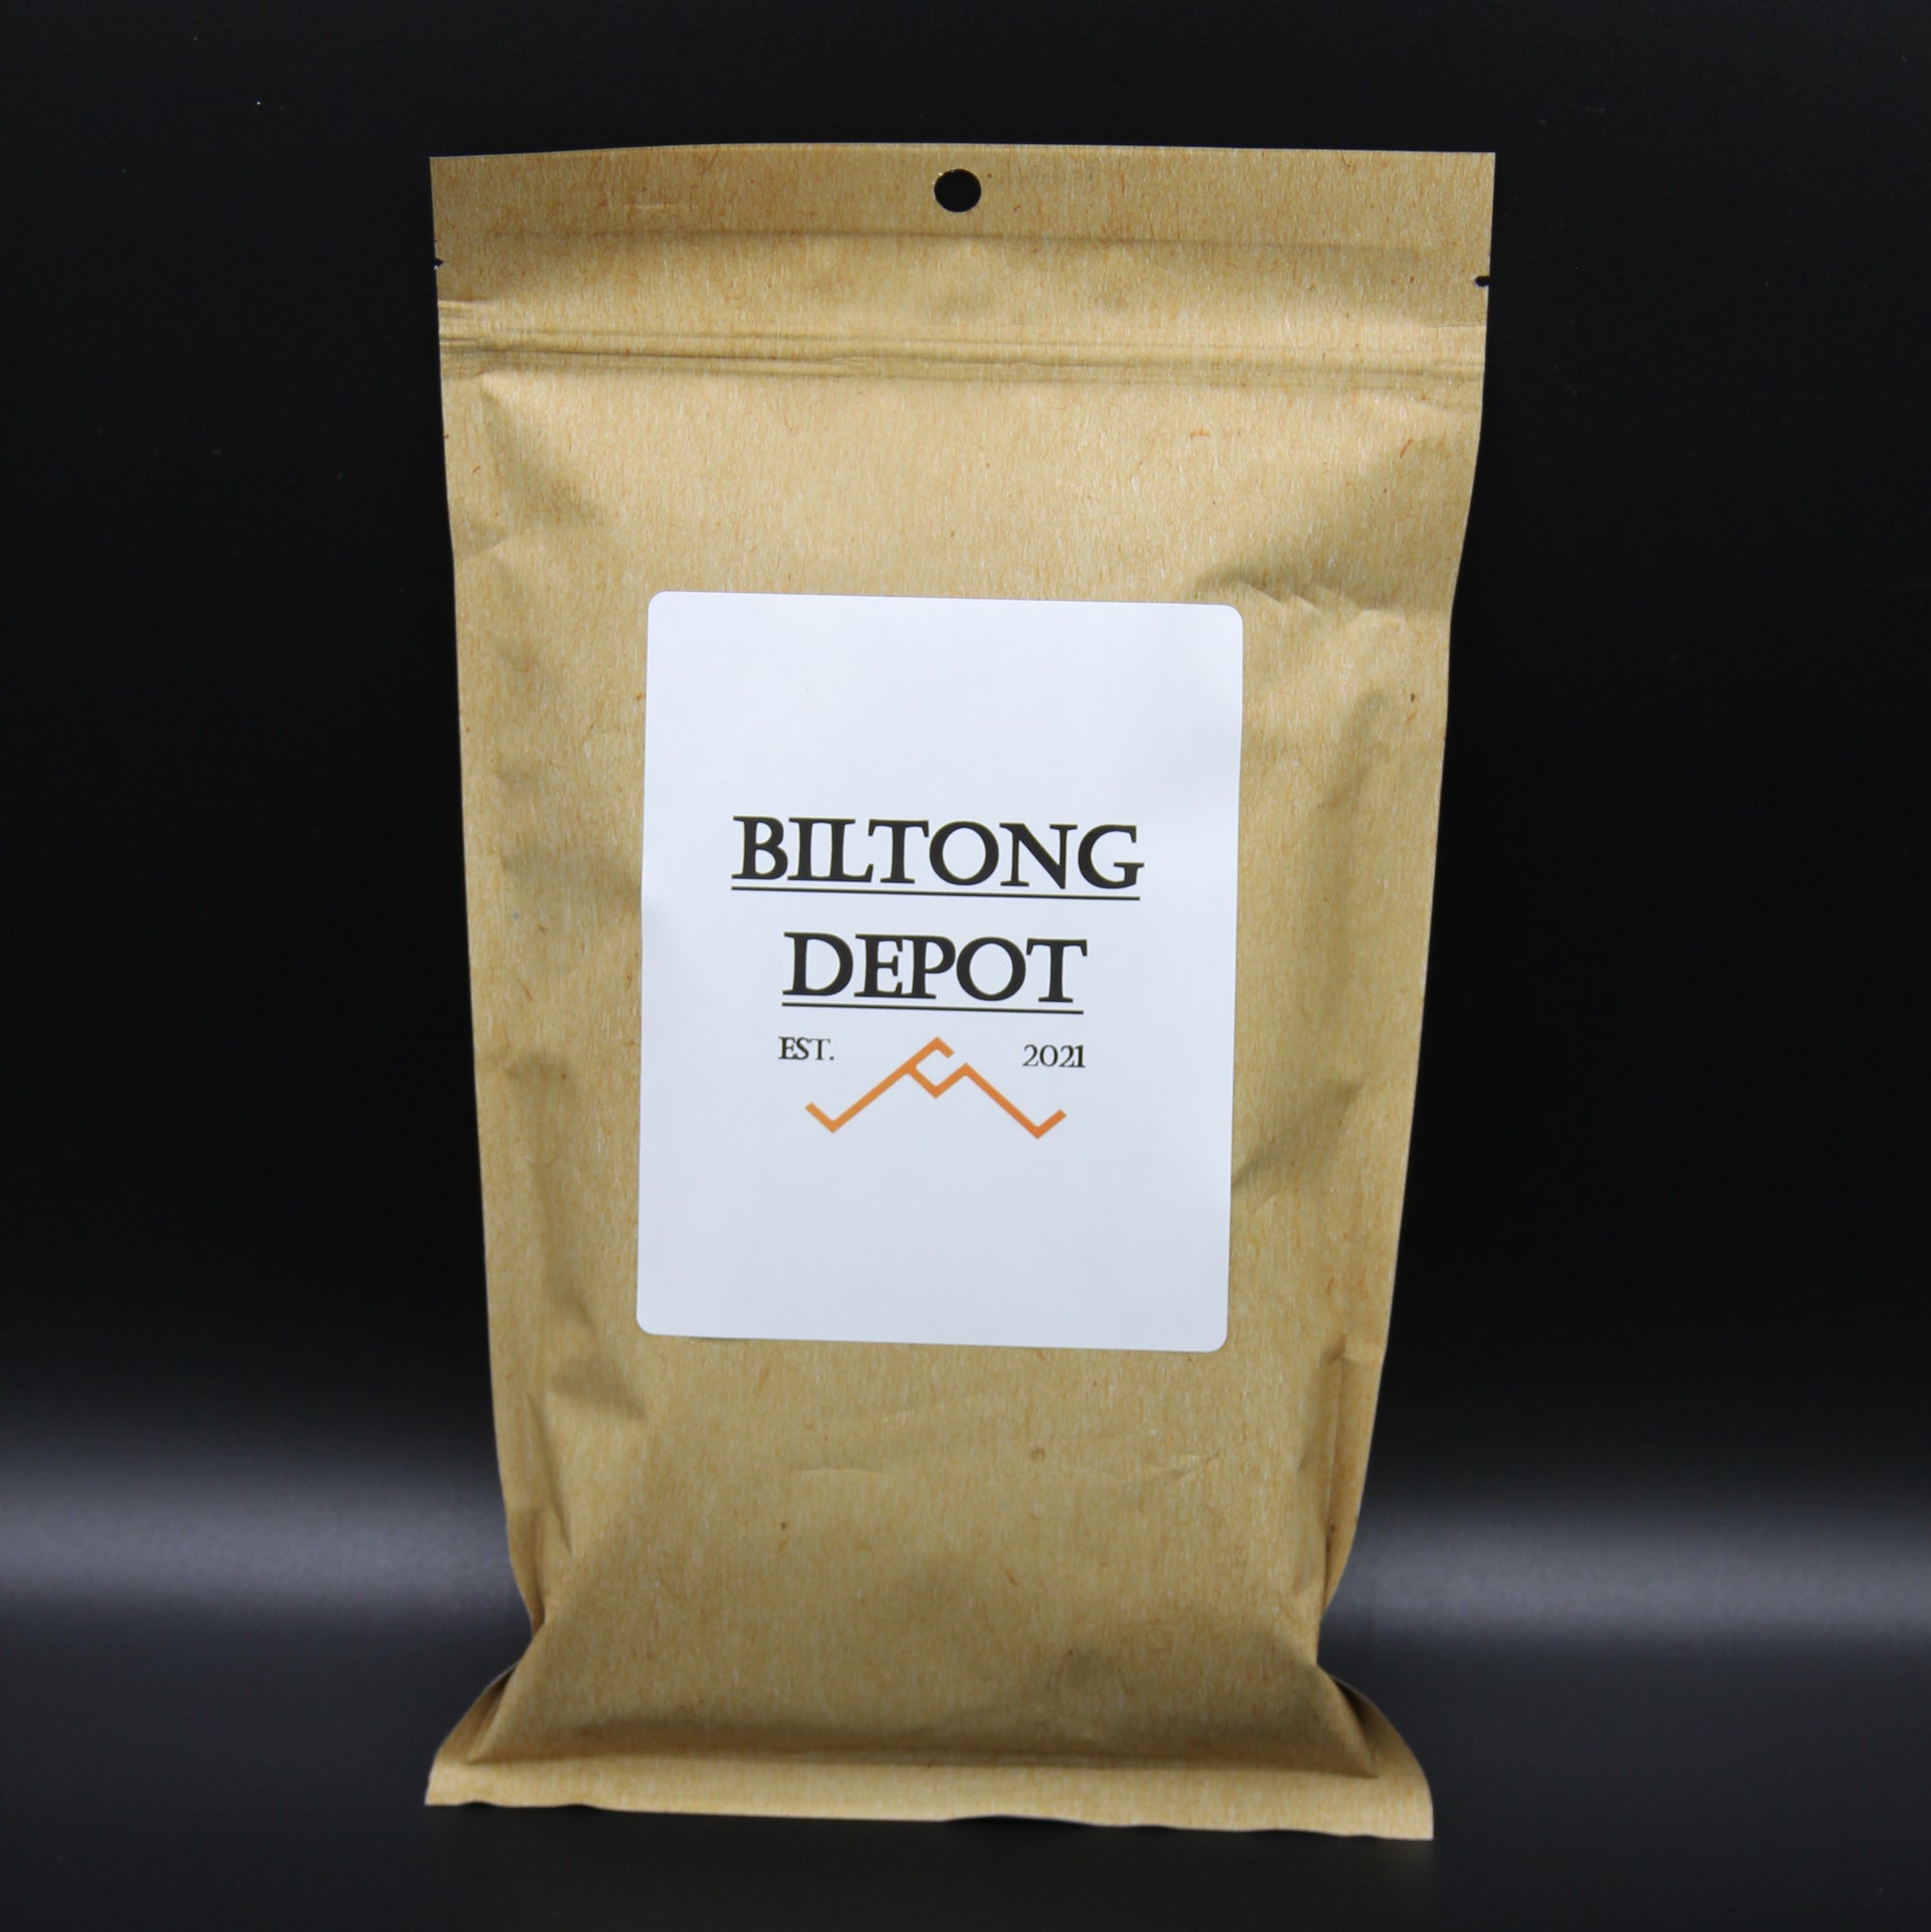 Hot & Spicy Biltong – Biltong Depot